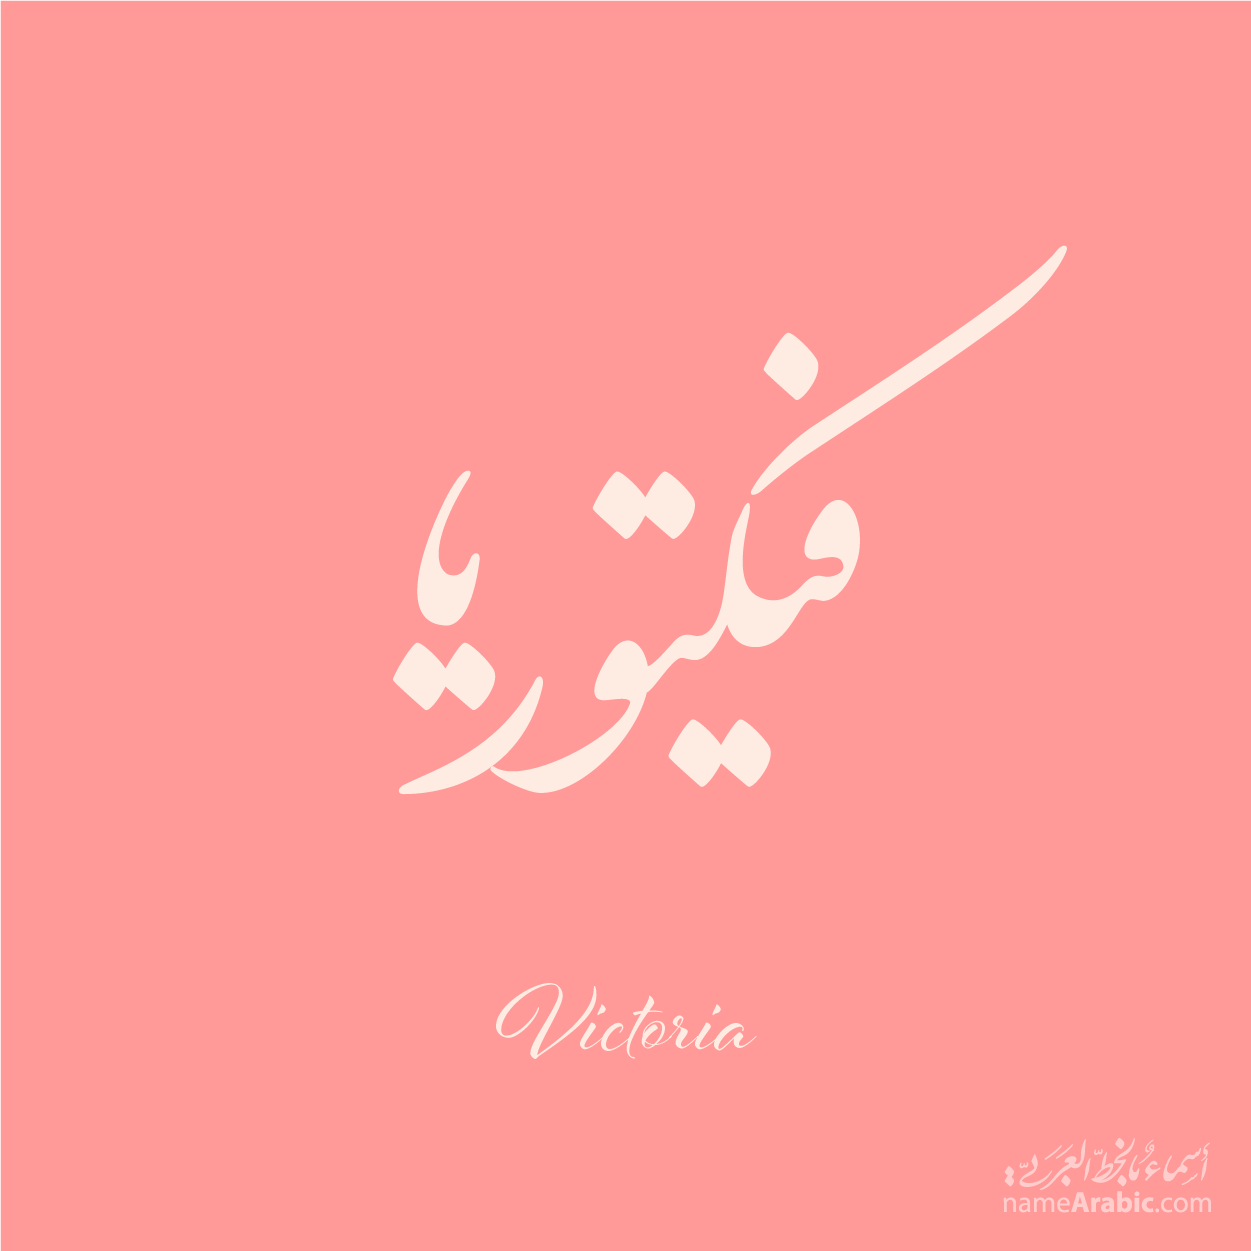 Victoria name design with Arabic Nastaleeq script